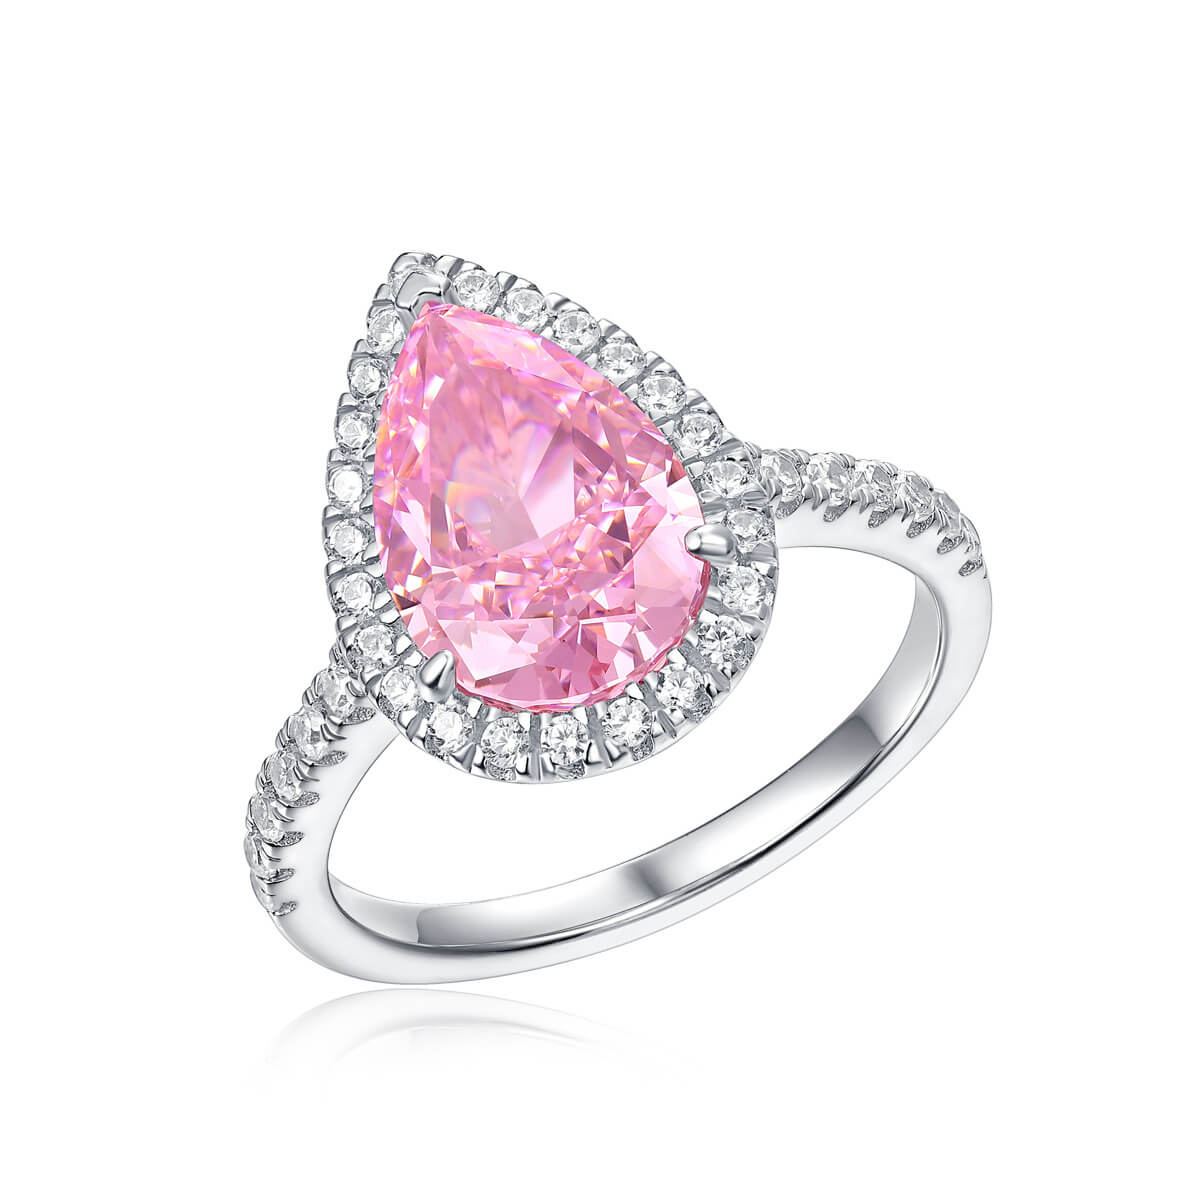  S925 Ocean Pink High Carbon Diamond Ring